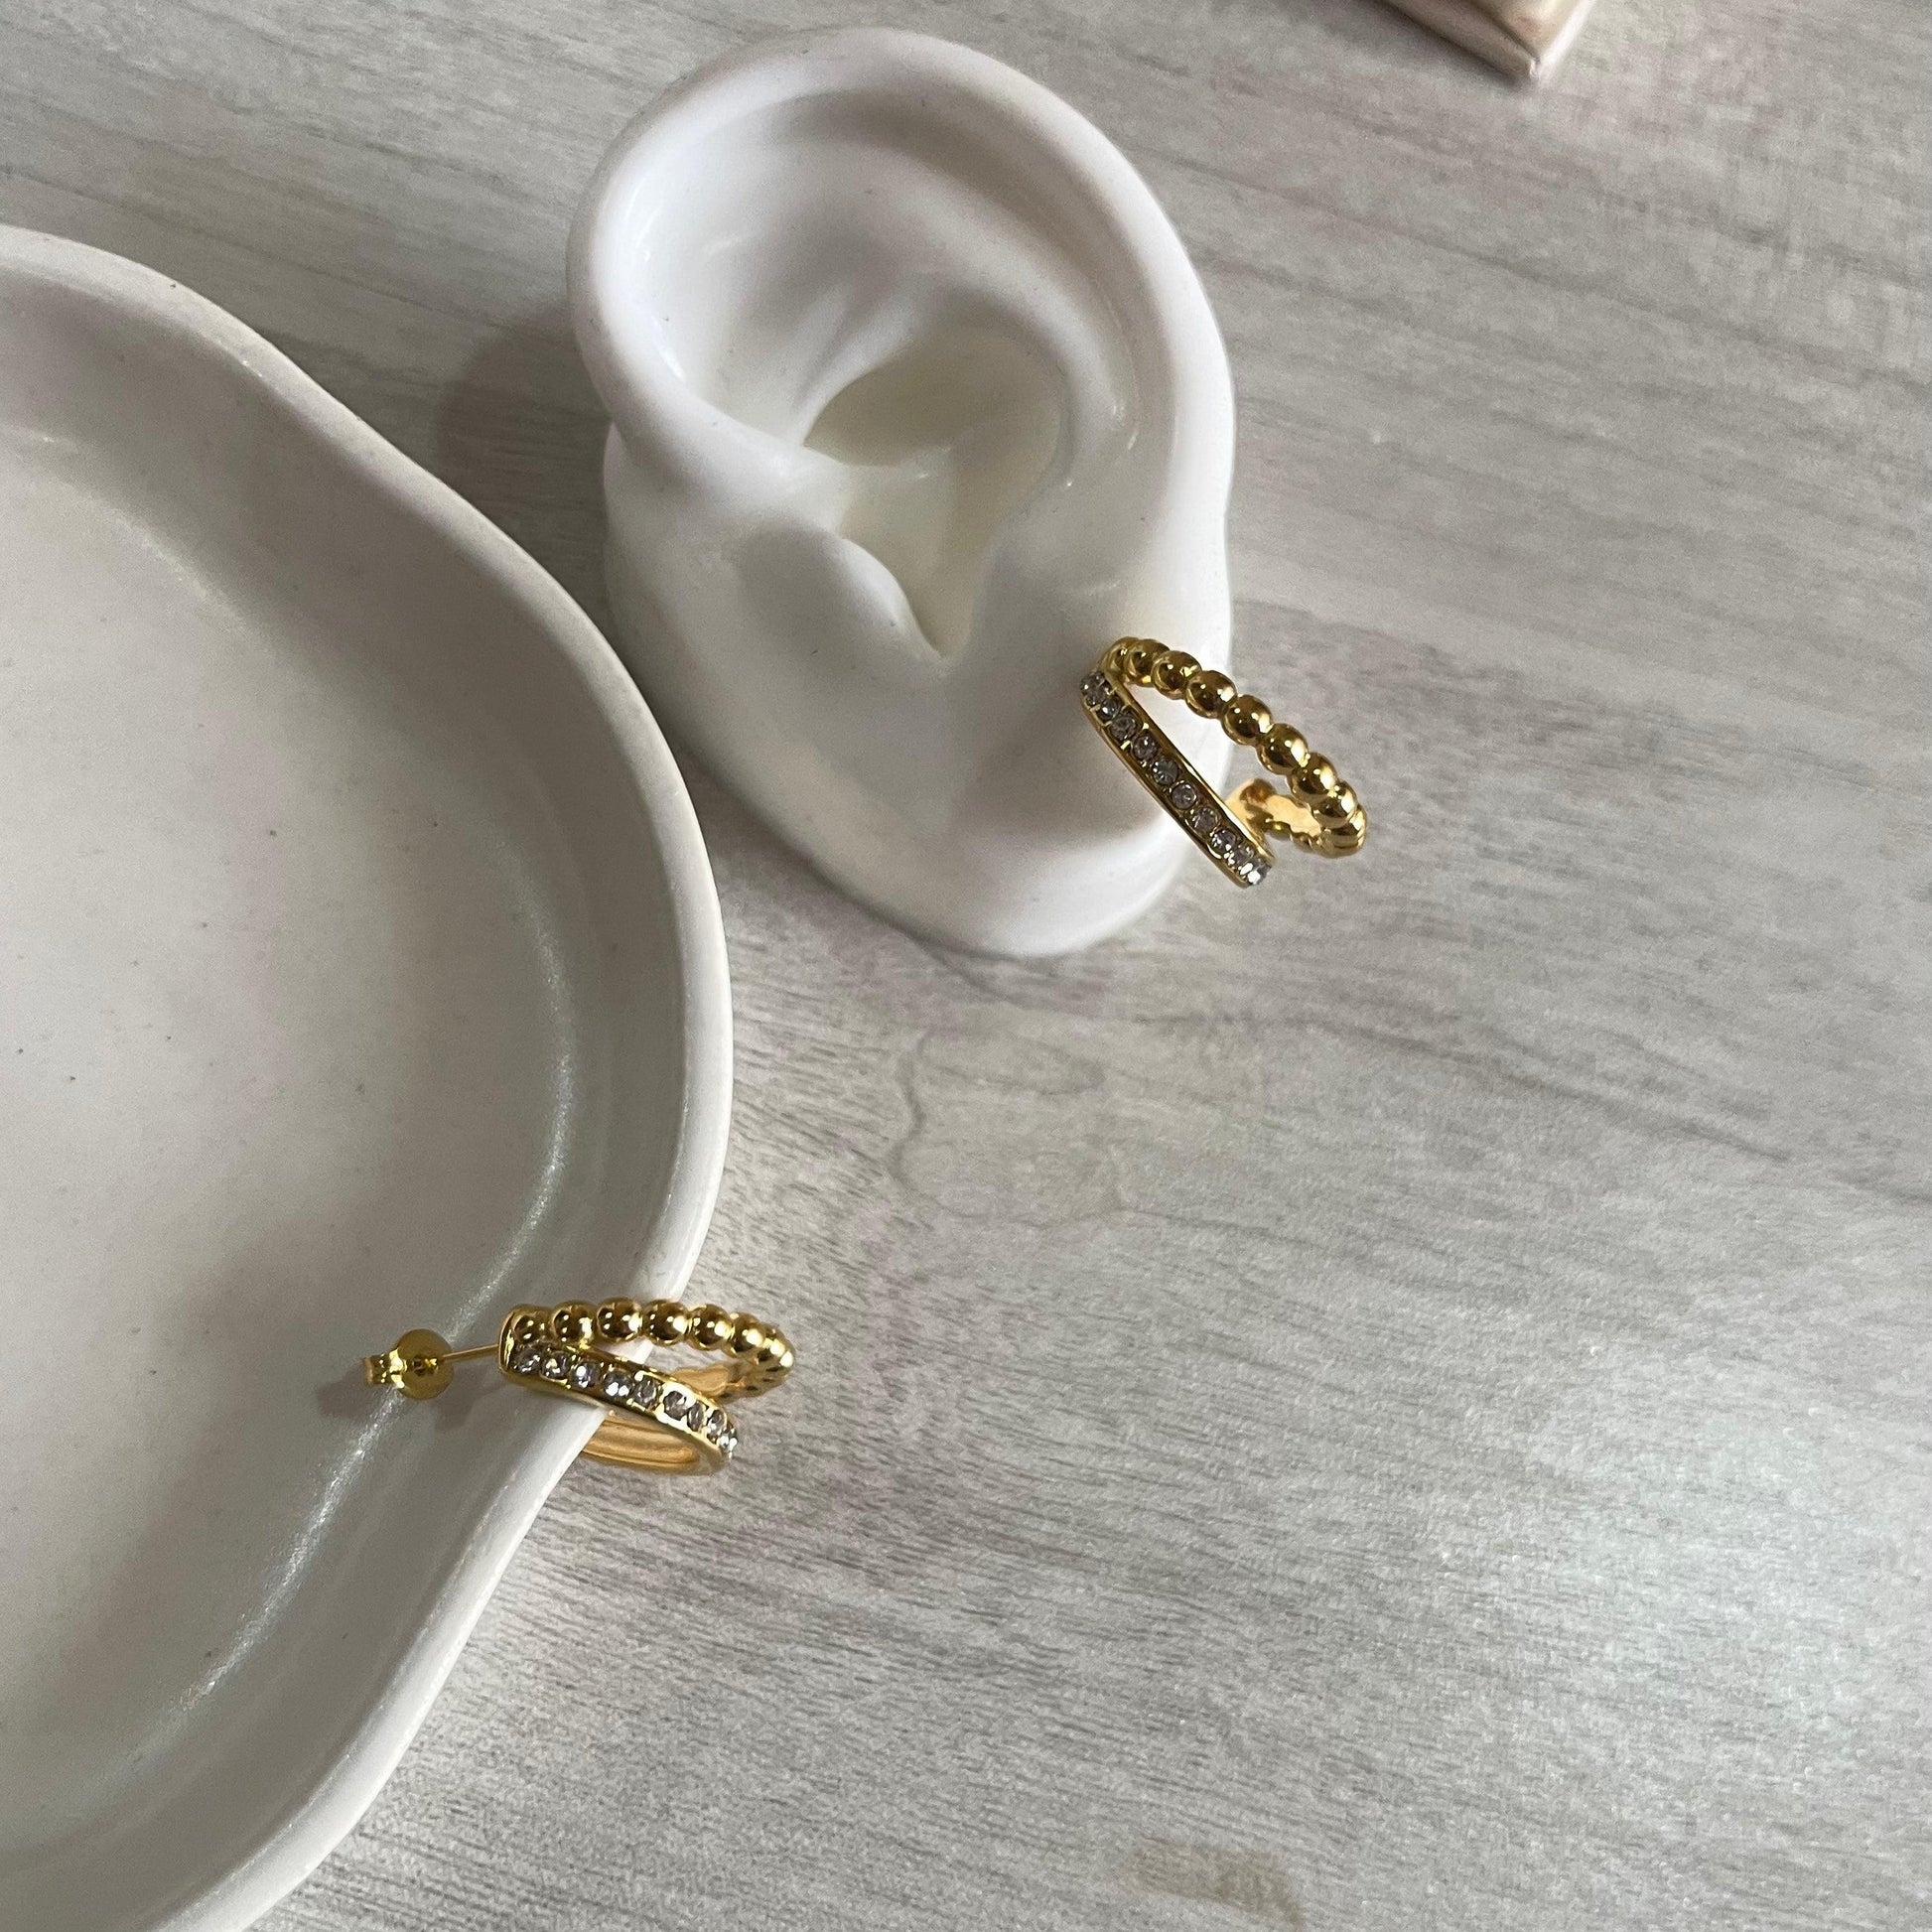 Berta | 18k gold plated earrings. - Ladywithcraft